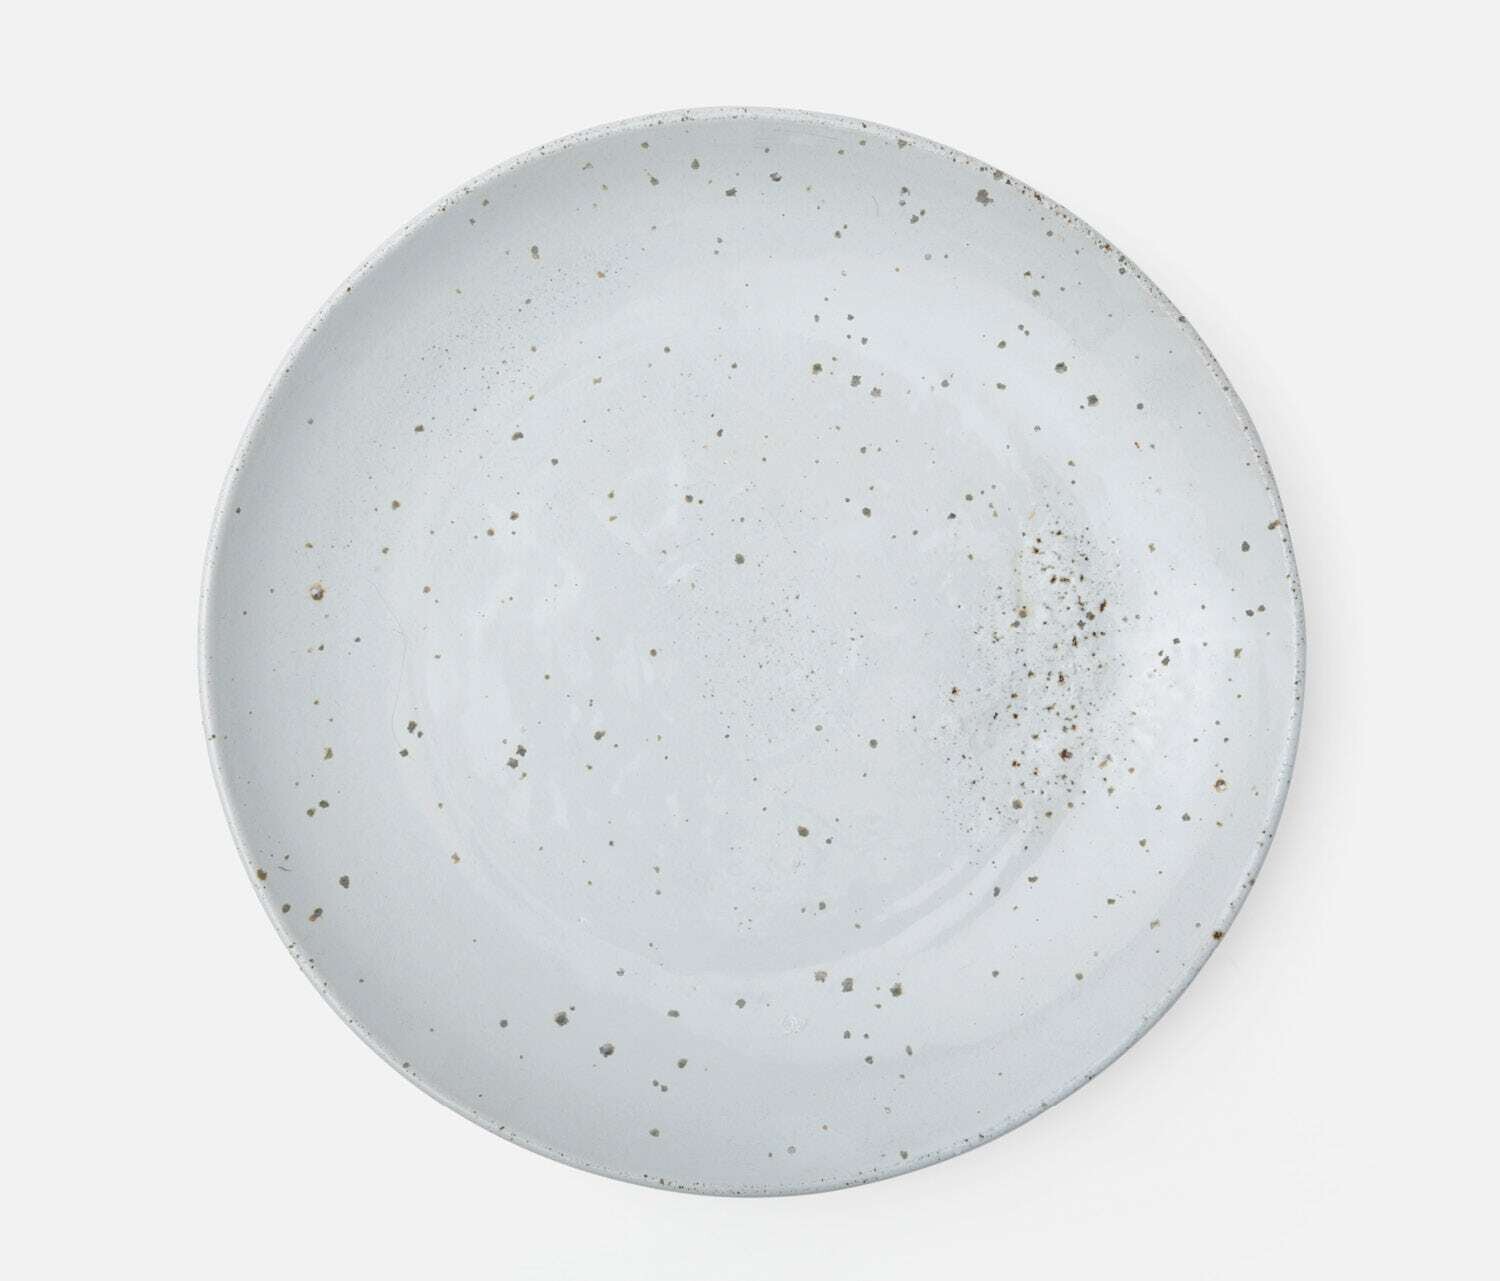 Marcus Large Round Serving Platter- White Salt Glaze